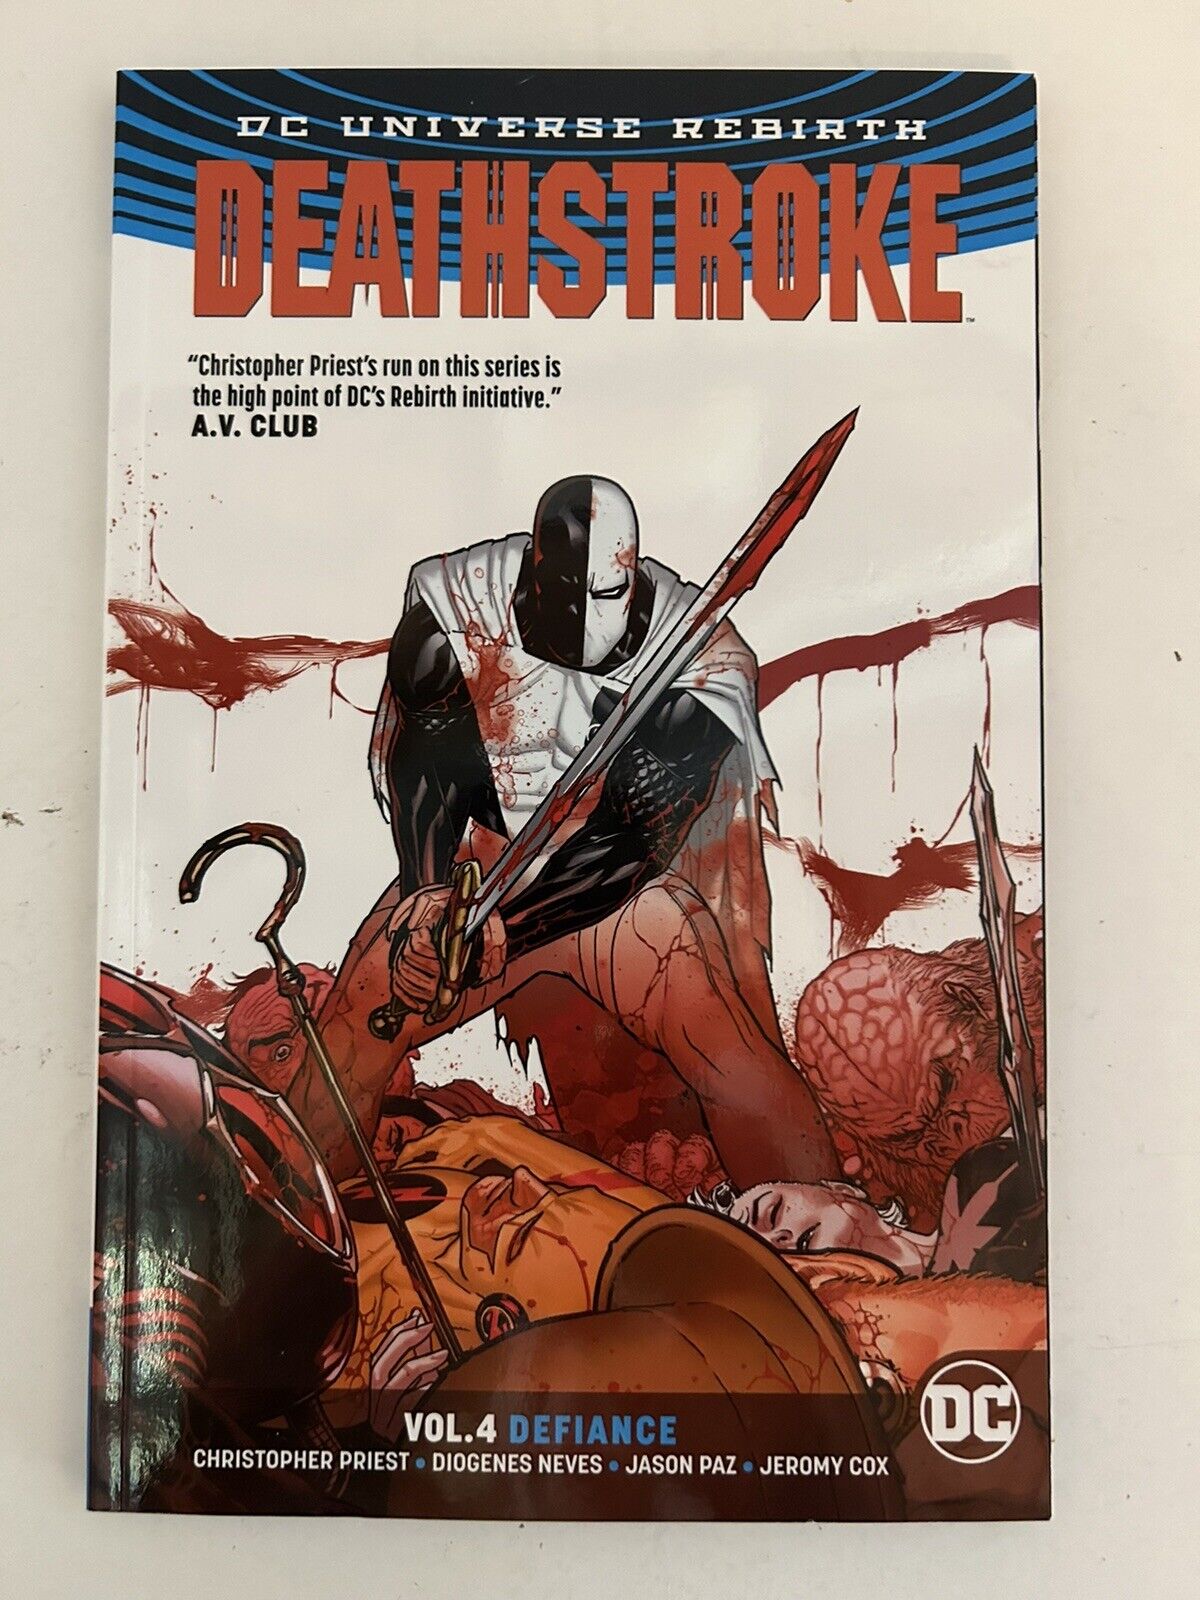 DEATHSTROKE Vol 4 DEFIANCE 2018 DC Comics TPB Christopher Priest BRAND NEW